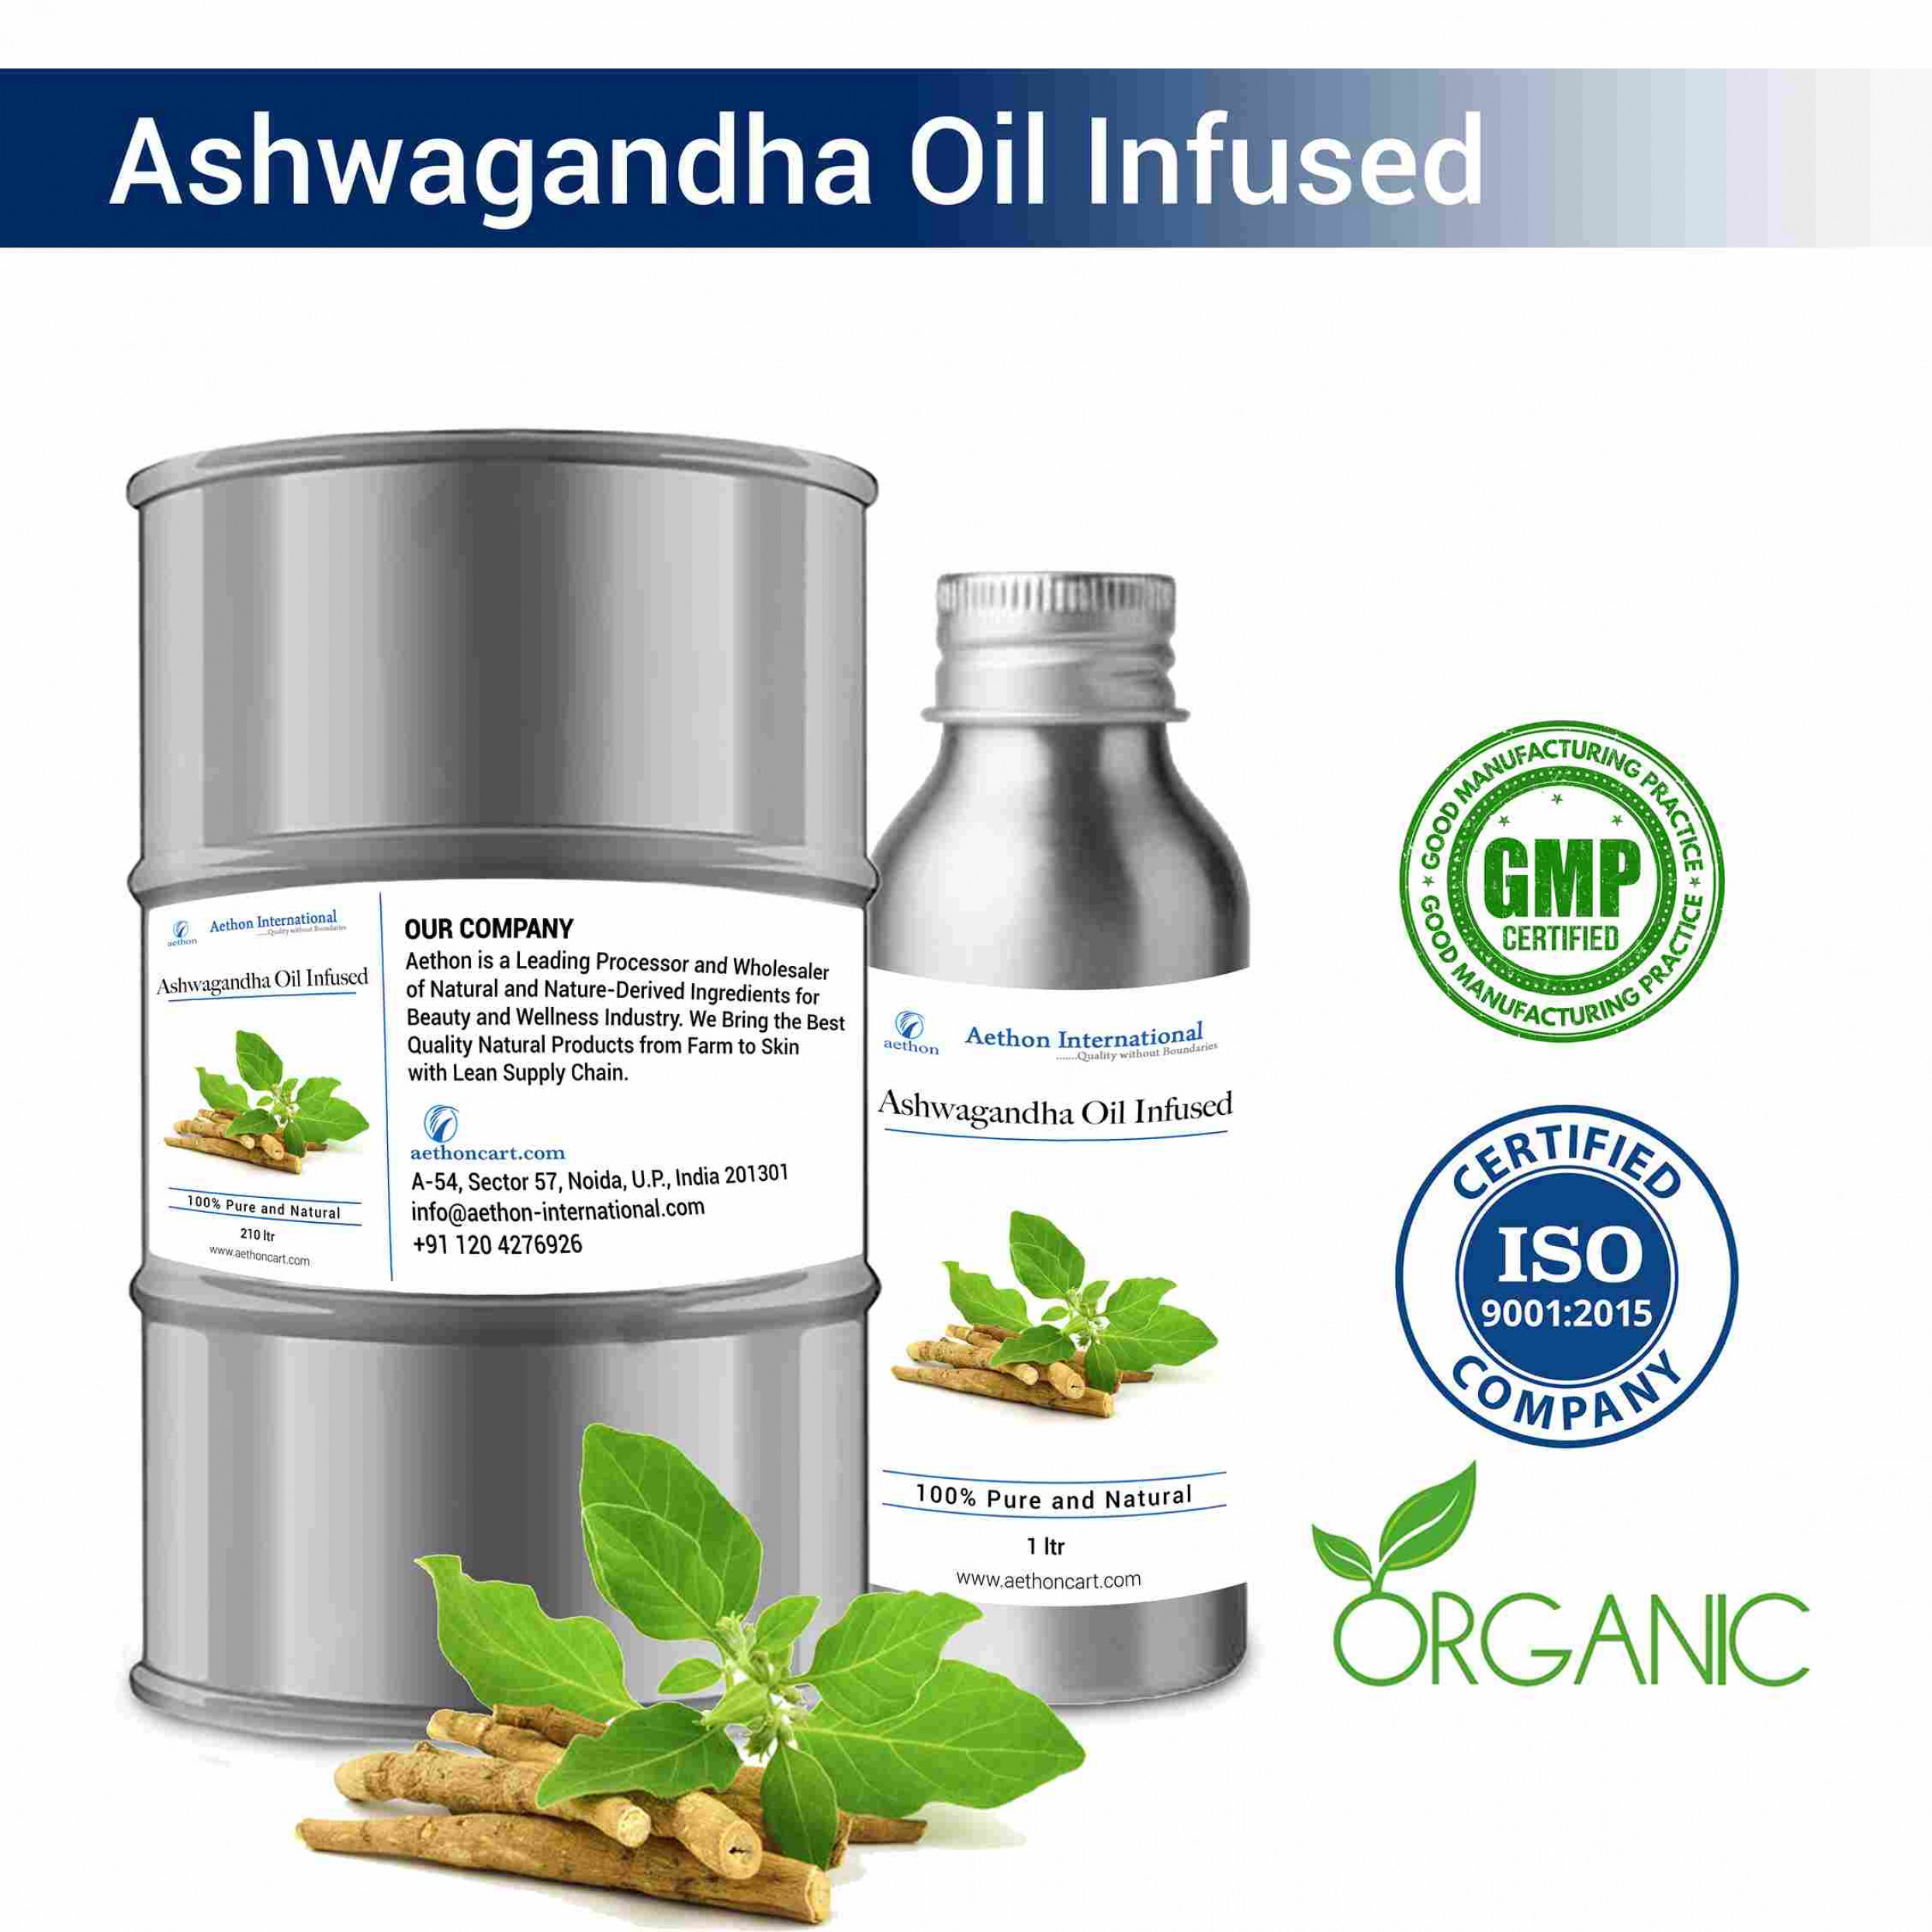 Ashwagandha Oil Infused